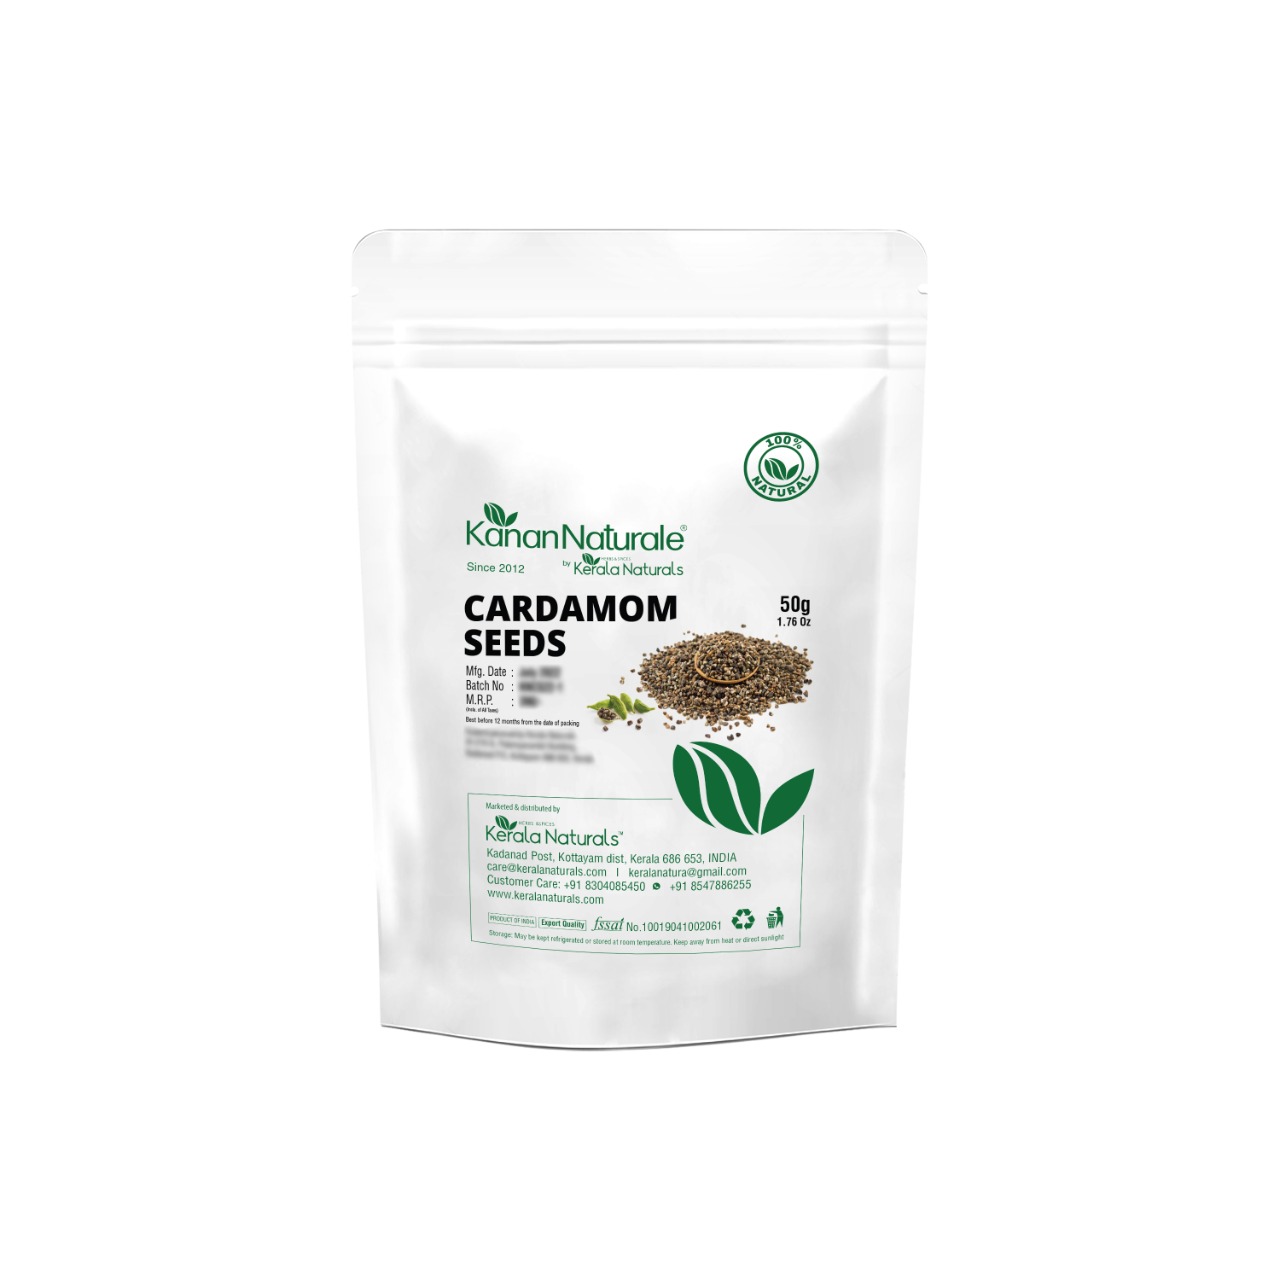 Buy Kanan Naturale Cardamom Seeds at Best Price Online